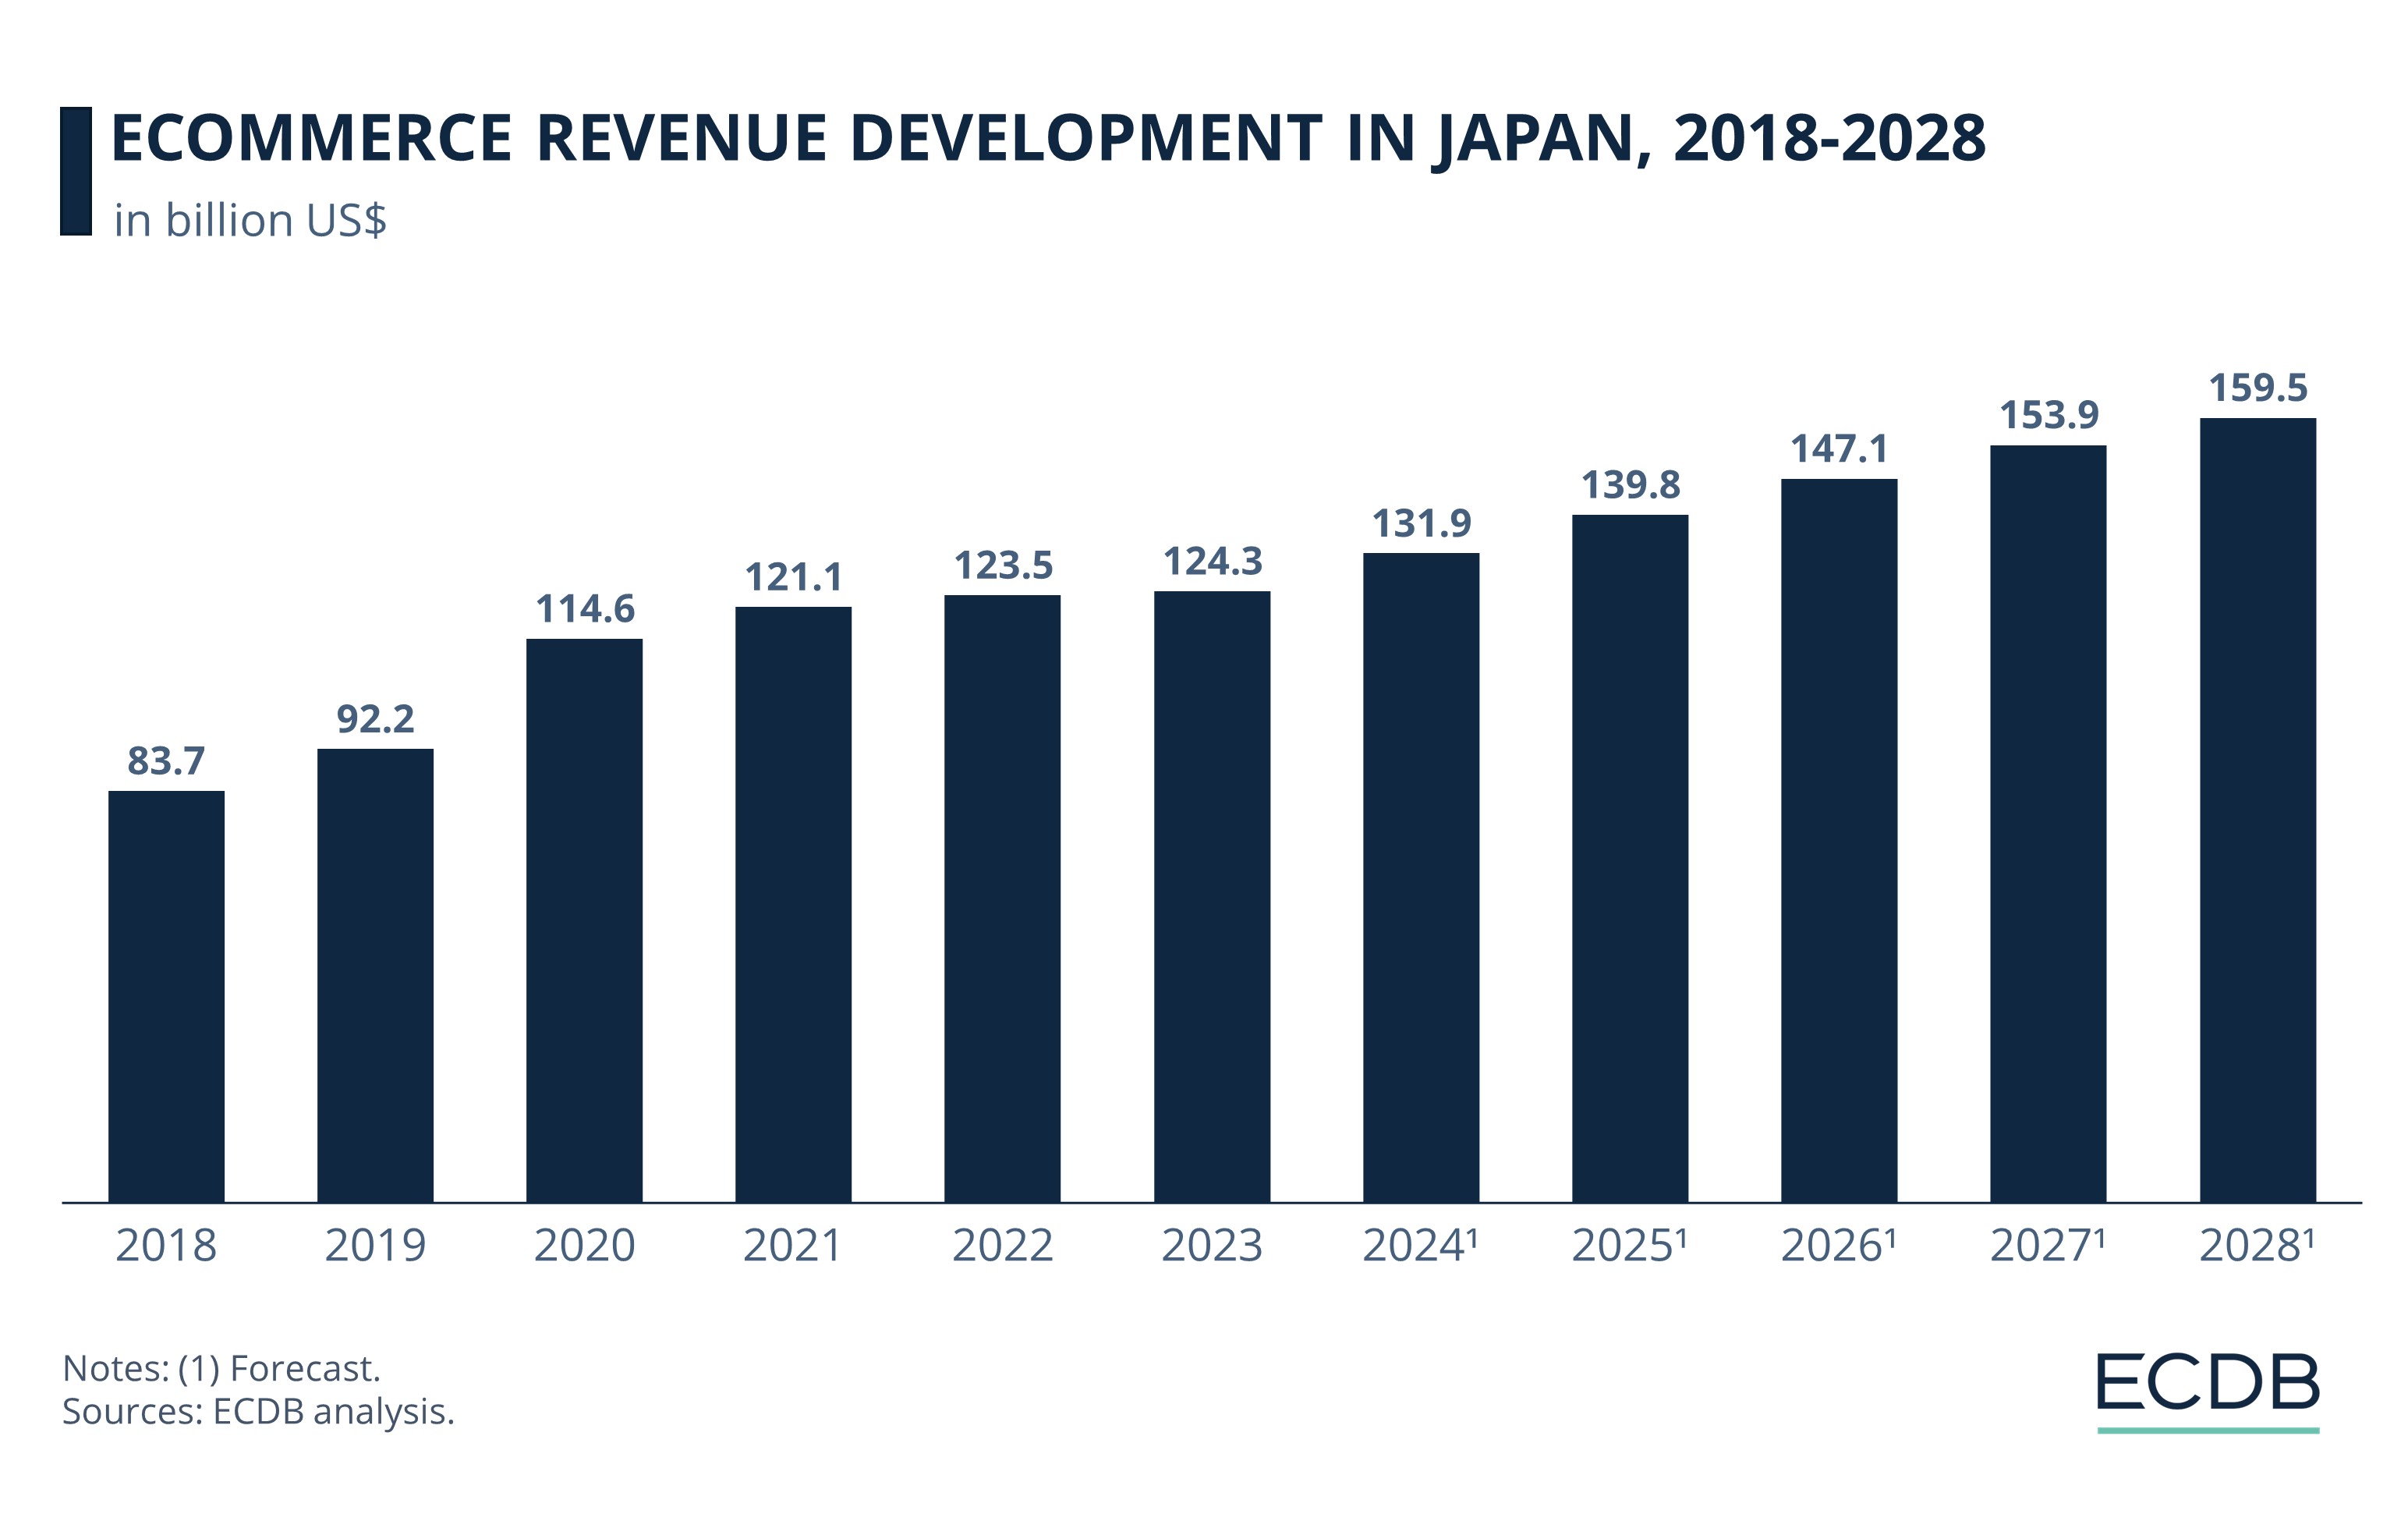 eCommerce Revenue Development in Japan, 2018-2028